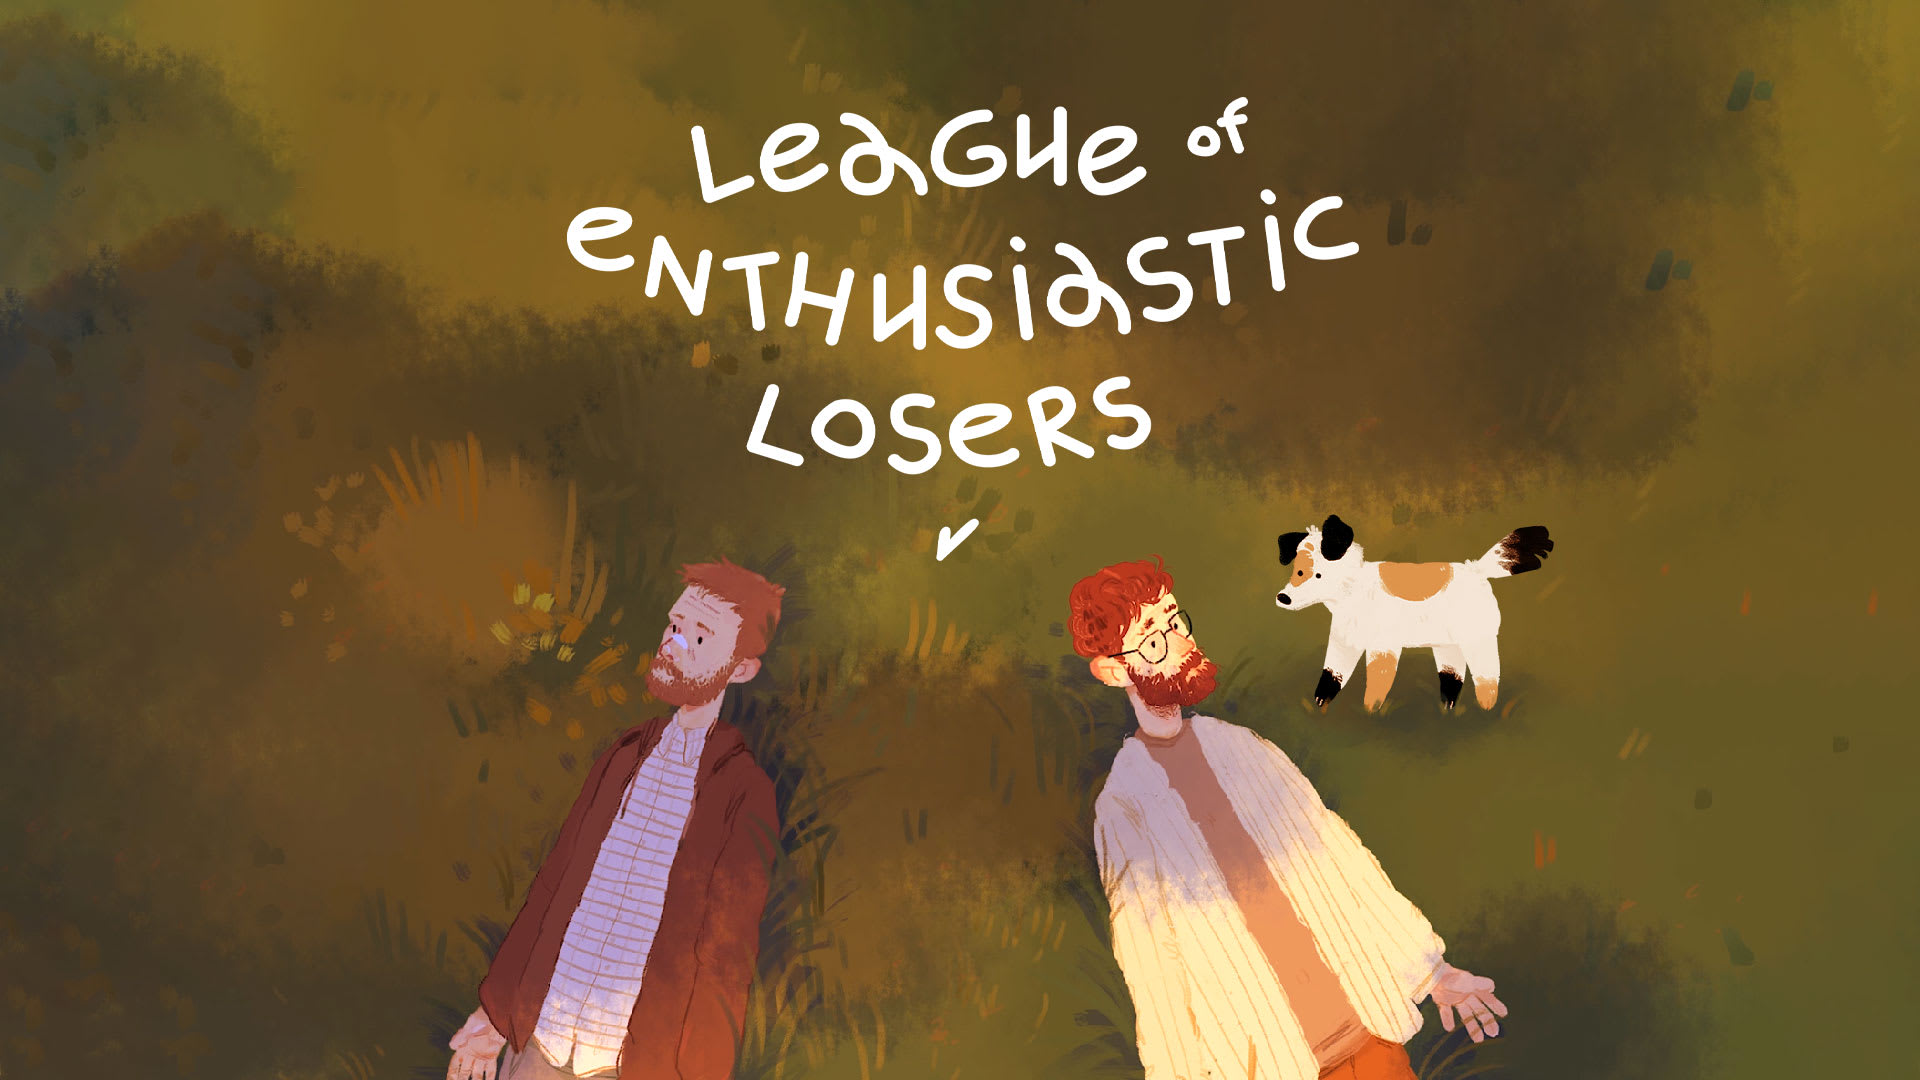 League of Enthusiastic Losers